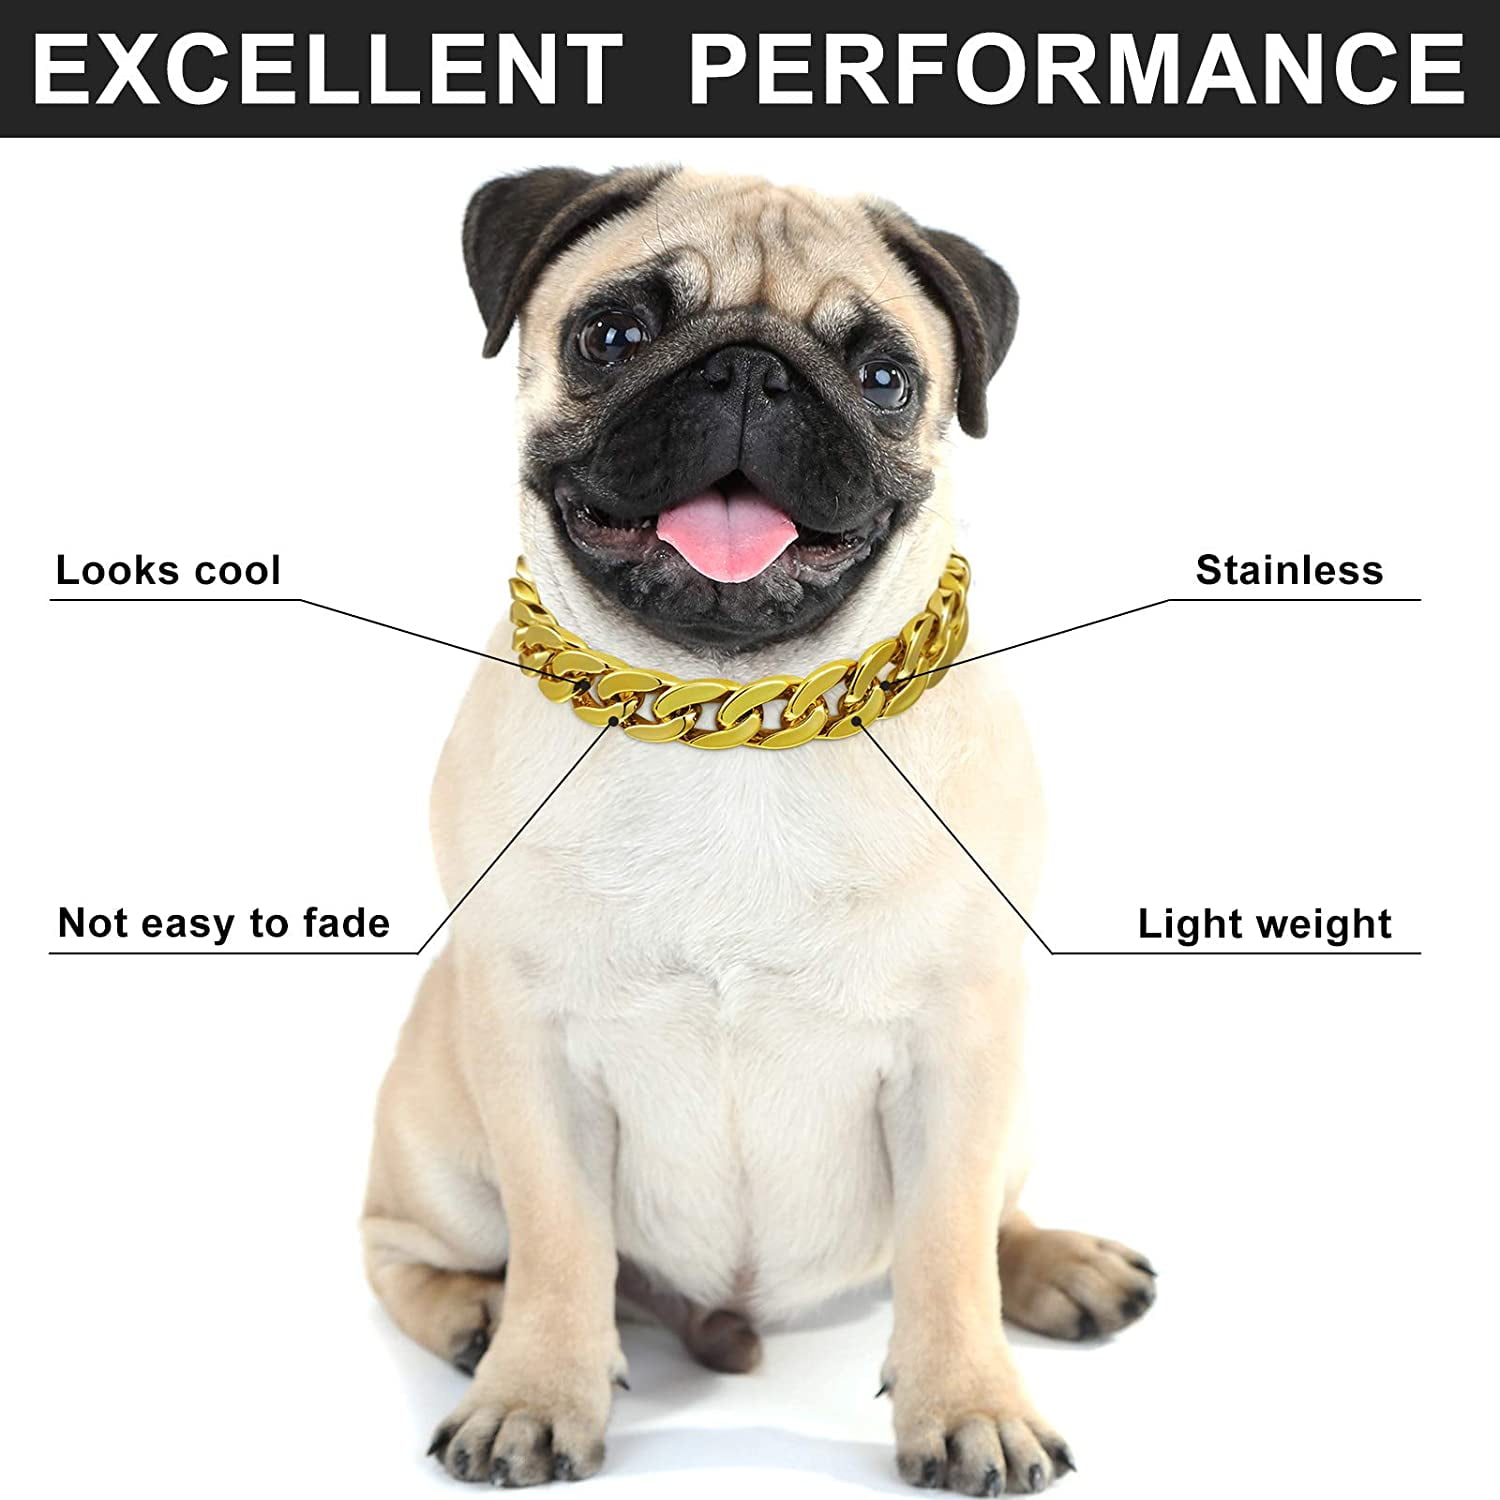  Gold Chain Dog Collar-15mm Cute Dog Collar Pet Gold Necklace  Bulldog Light Metal Puppy Jewelry 20 Chain Puppy Costume : Pet Supplies